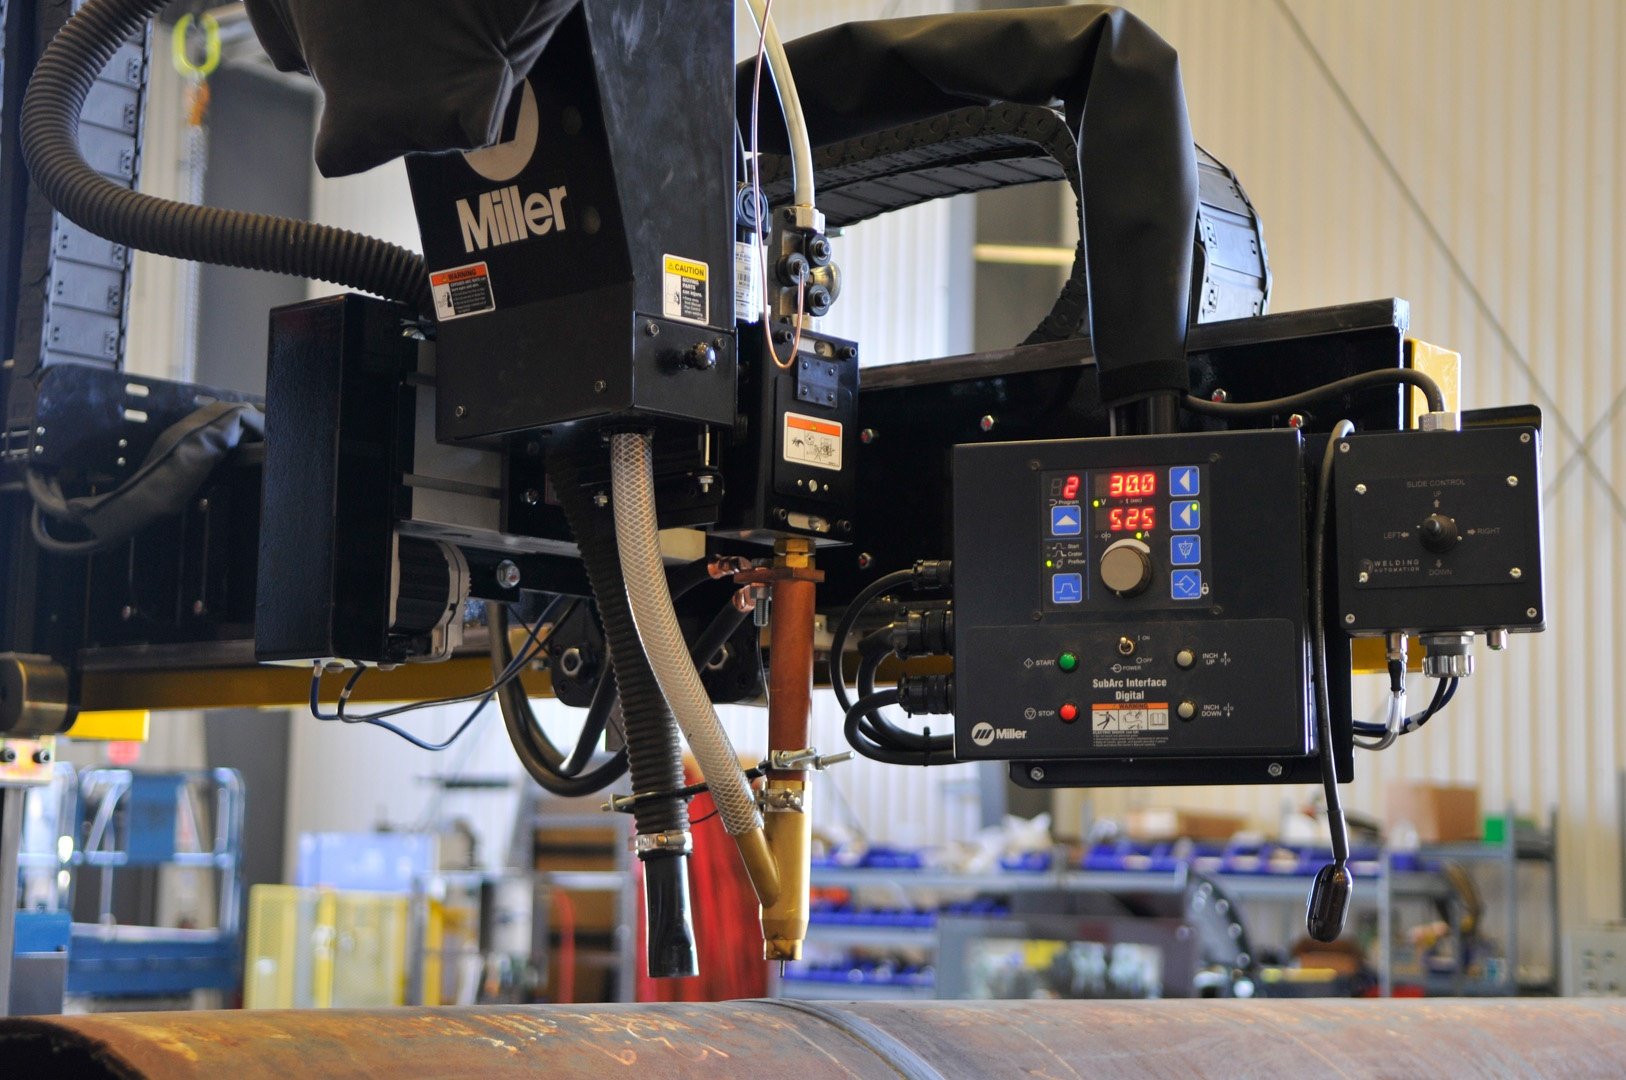 miller boom mounted controls for welding manipulator